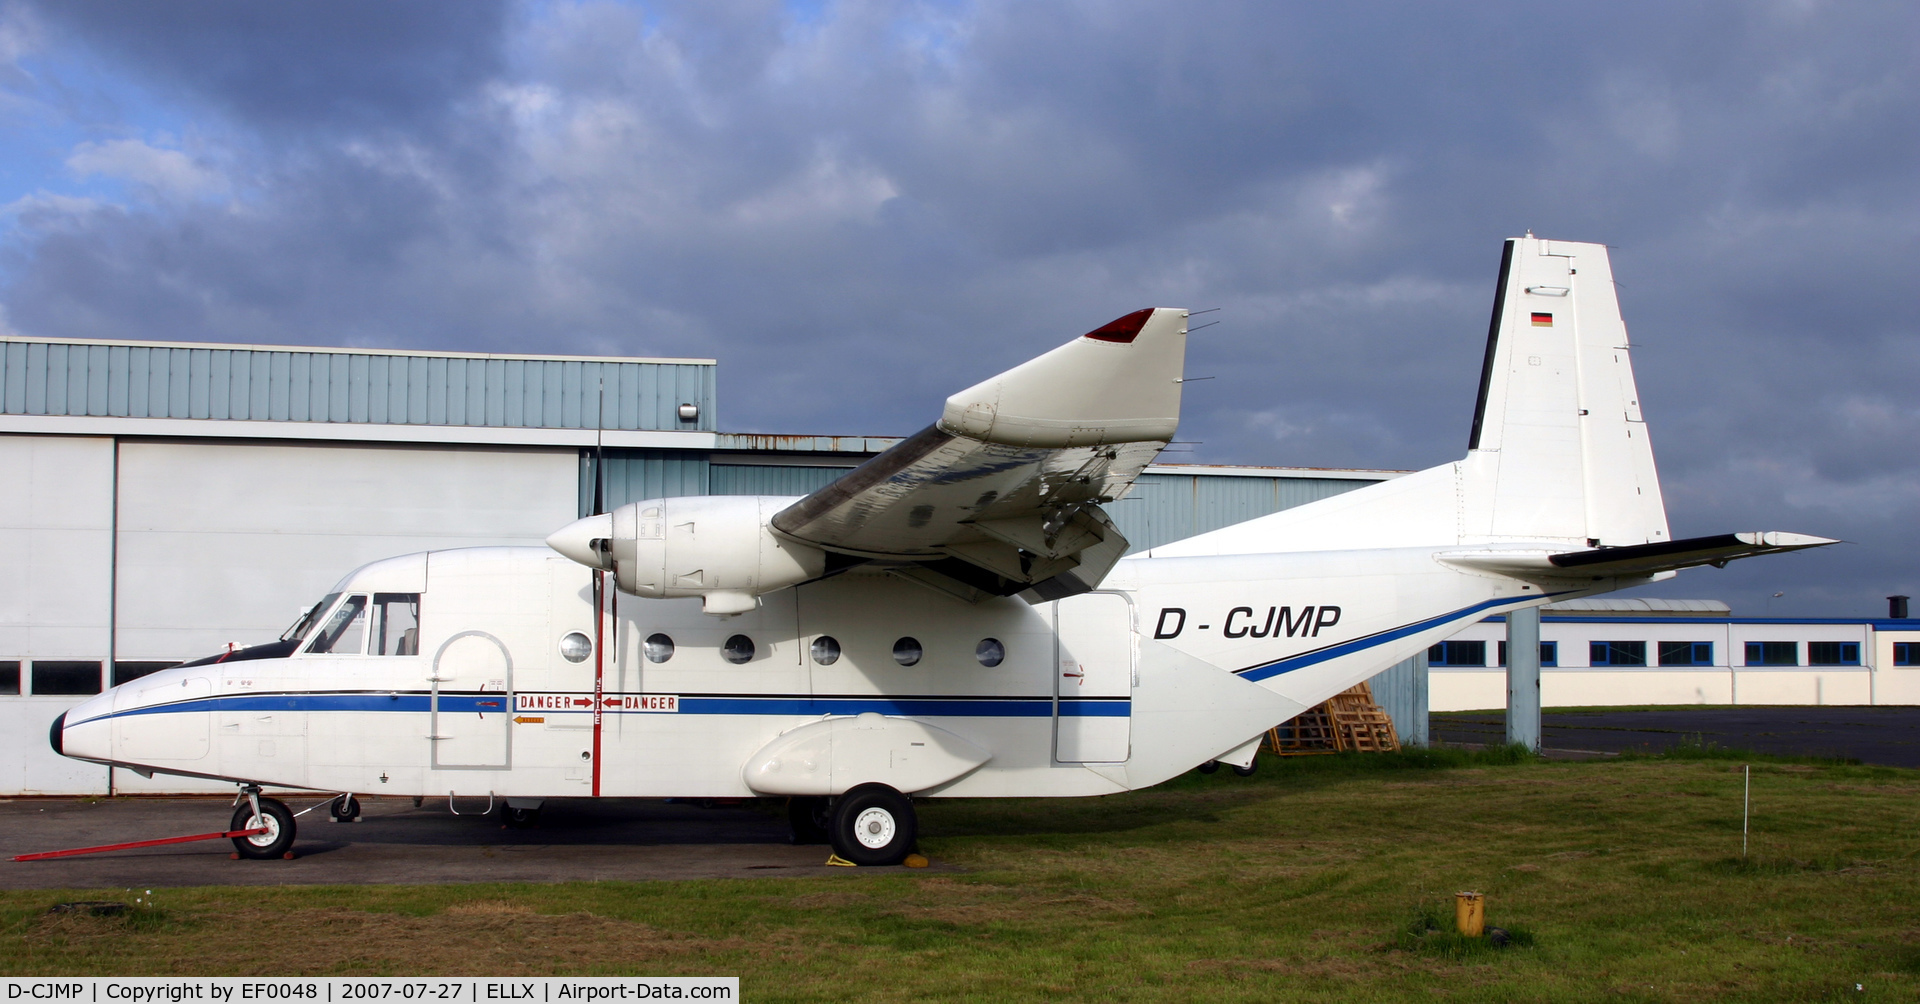 D-CJMP, 1988 CASA C-212-300 Aviocar C/N 387, new to data base